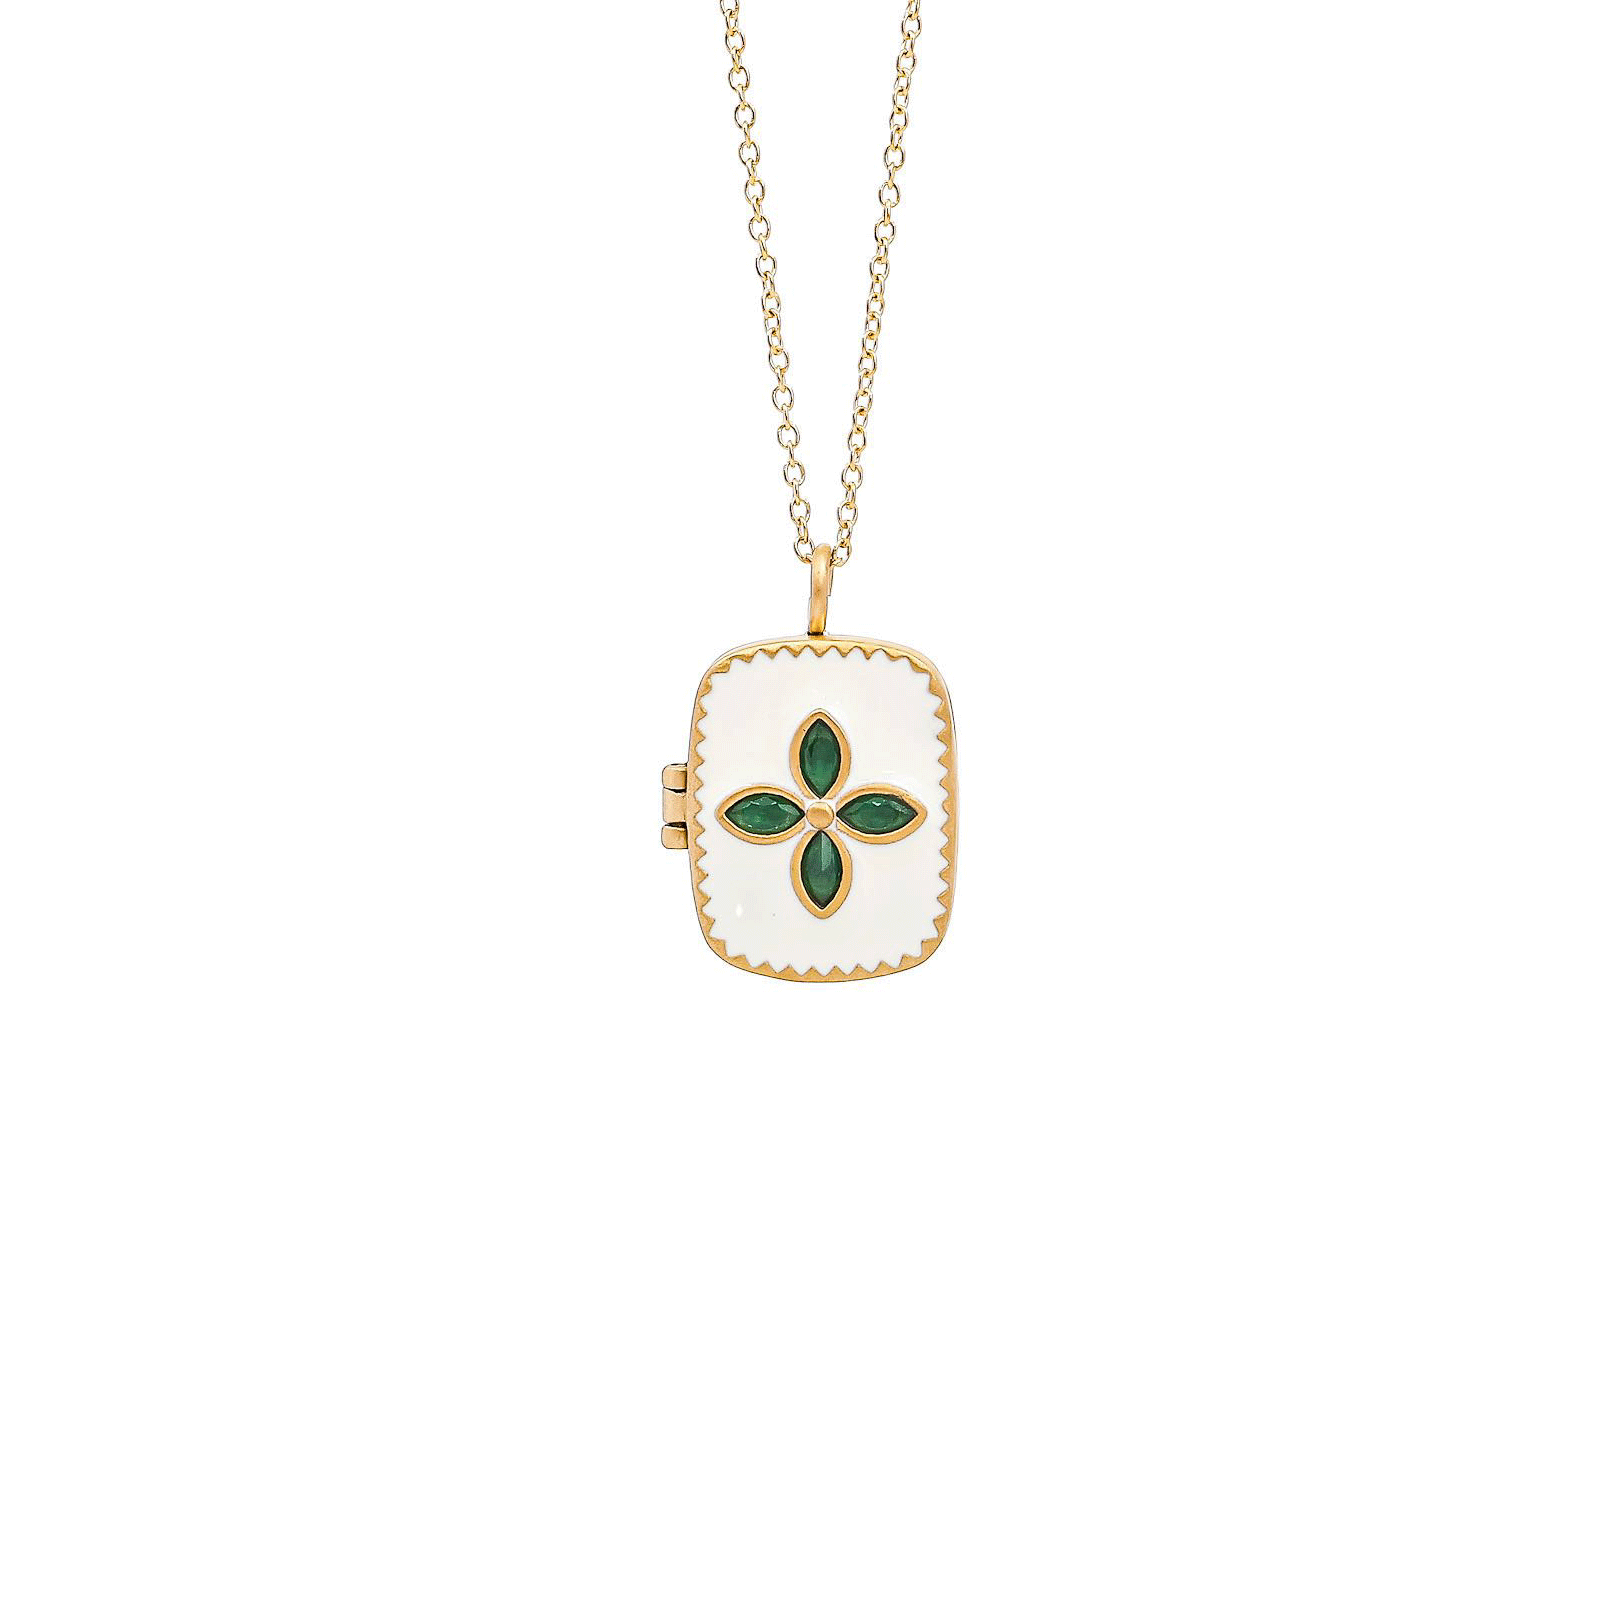 Lilly medallion necklace - White enamel